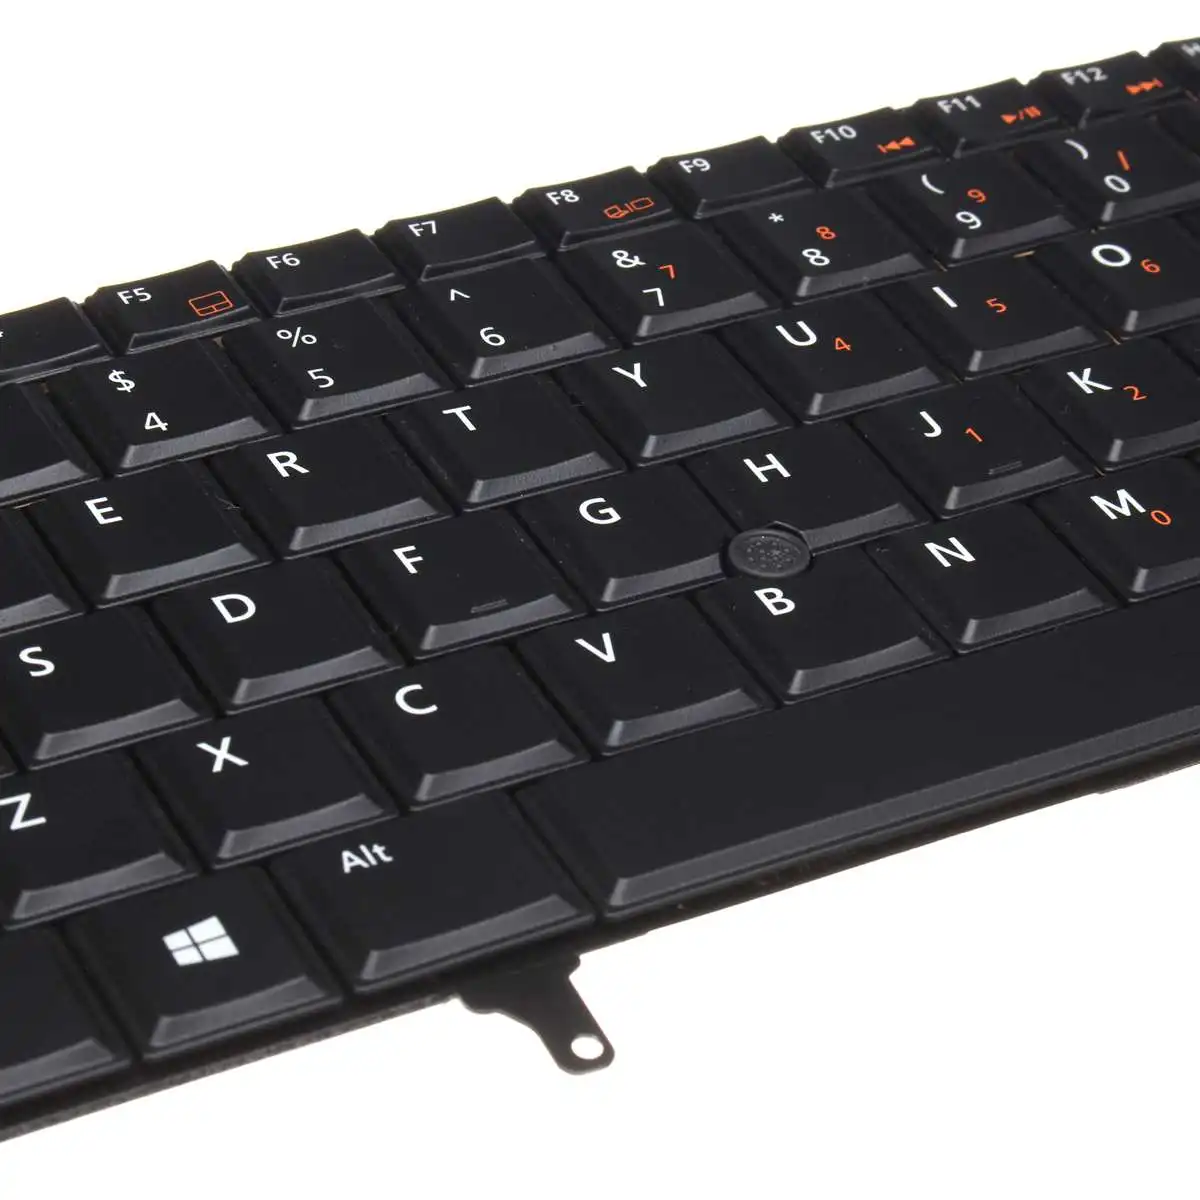 Backlit Laptop Keyboard for Dell Latitude E6320 E6320 E6420 E6430 E6440 E5420 E5430 Replacement English Notebook Keyboard